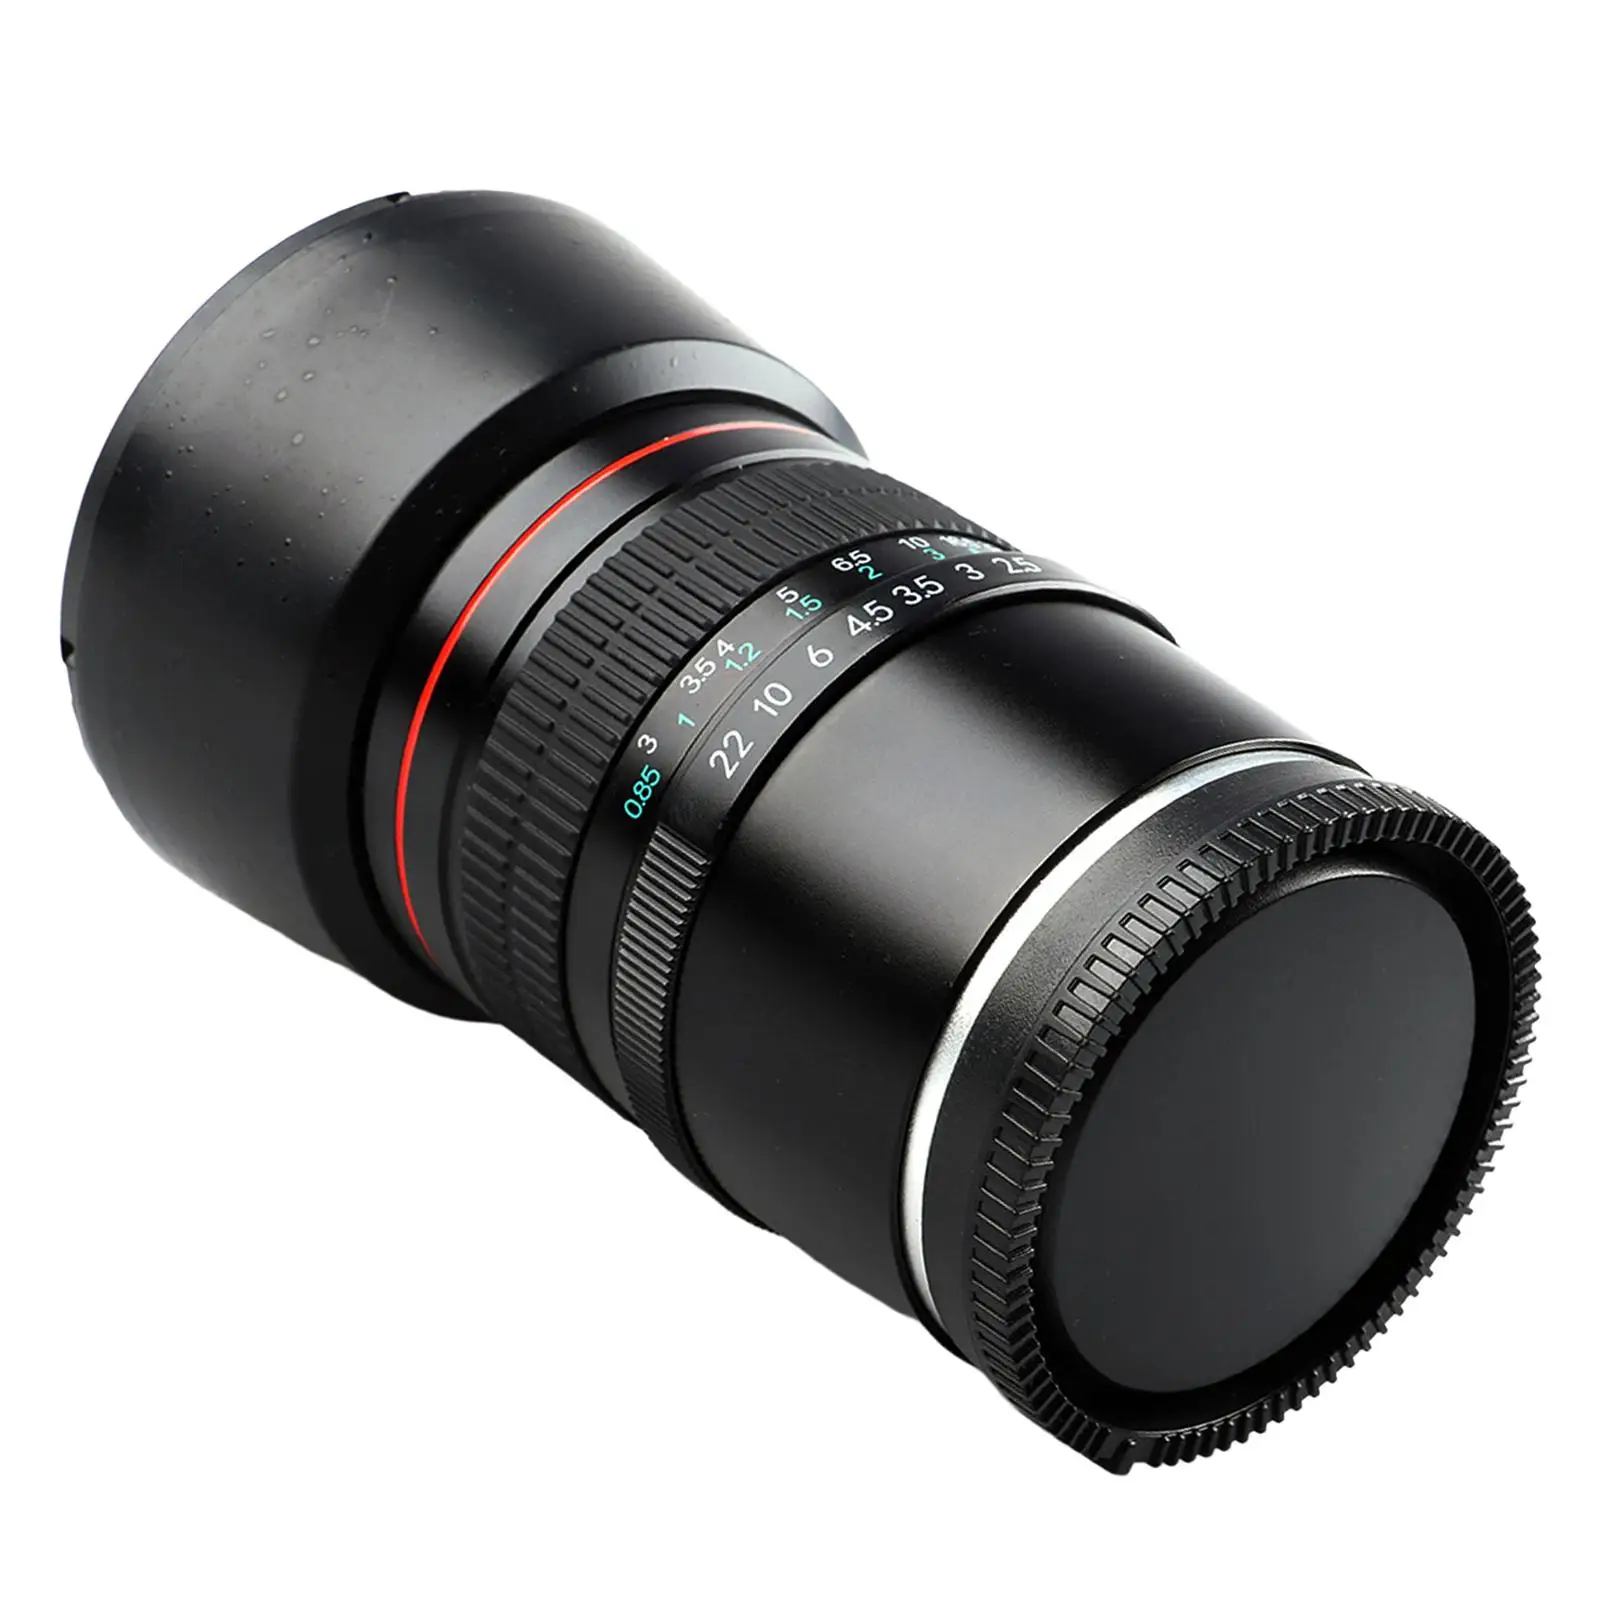 85mm 1.8 E buckle lens Medium Telephoto Full Frame Manual Lens Lightweight Fixed Lens for A9  A7S A7 A6500 A6300 A6000 Cameras